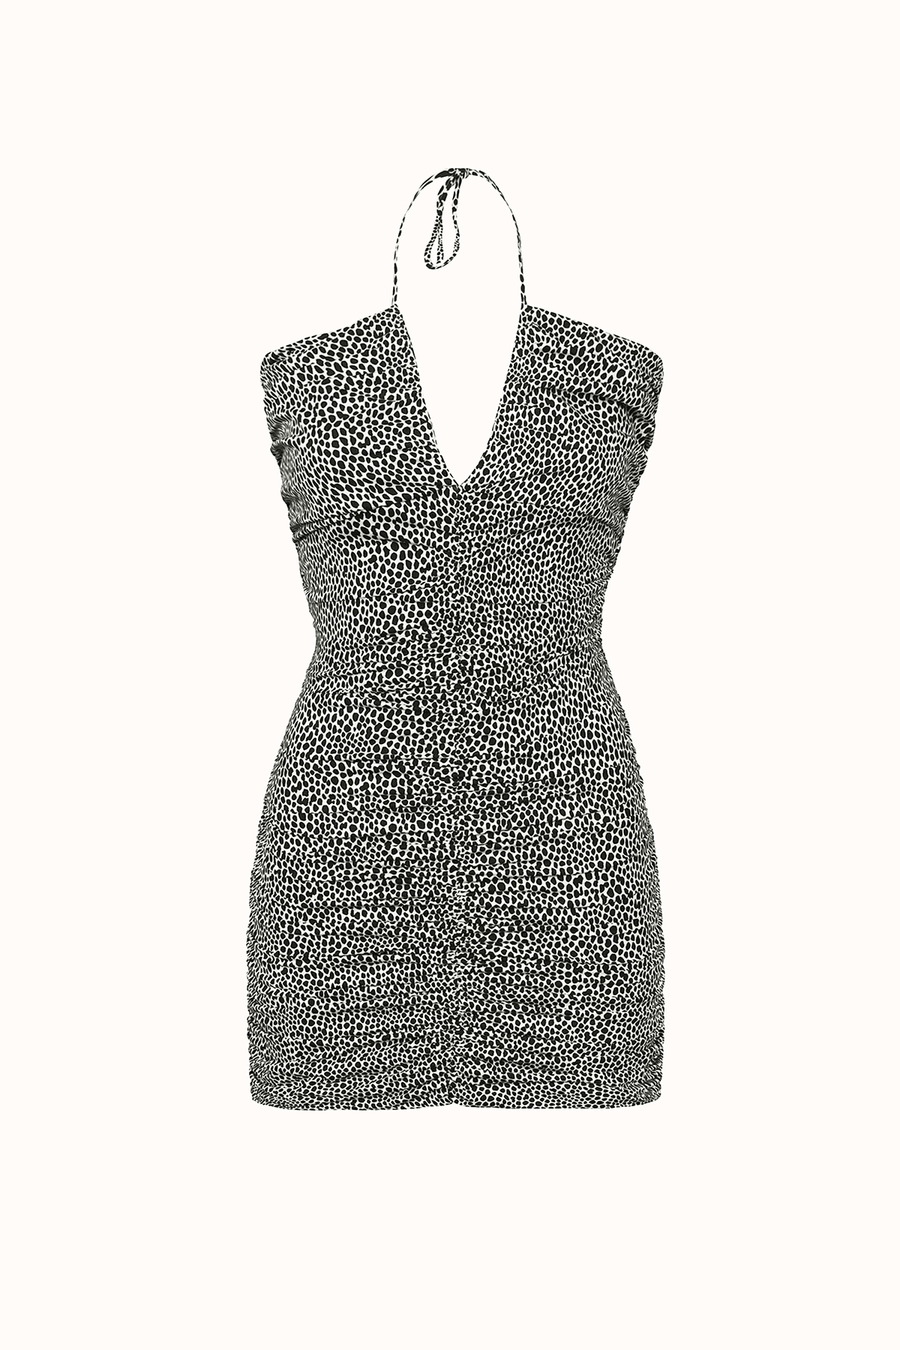 Penny Elbise / Siyah Beyaz Desenli - NAIA ISTANBUL Shop Online